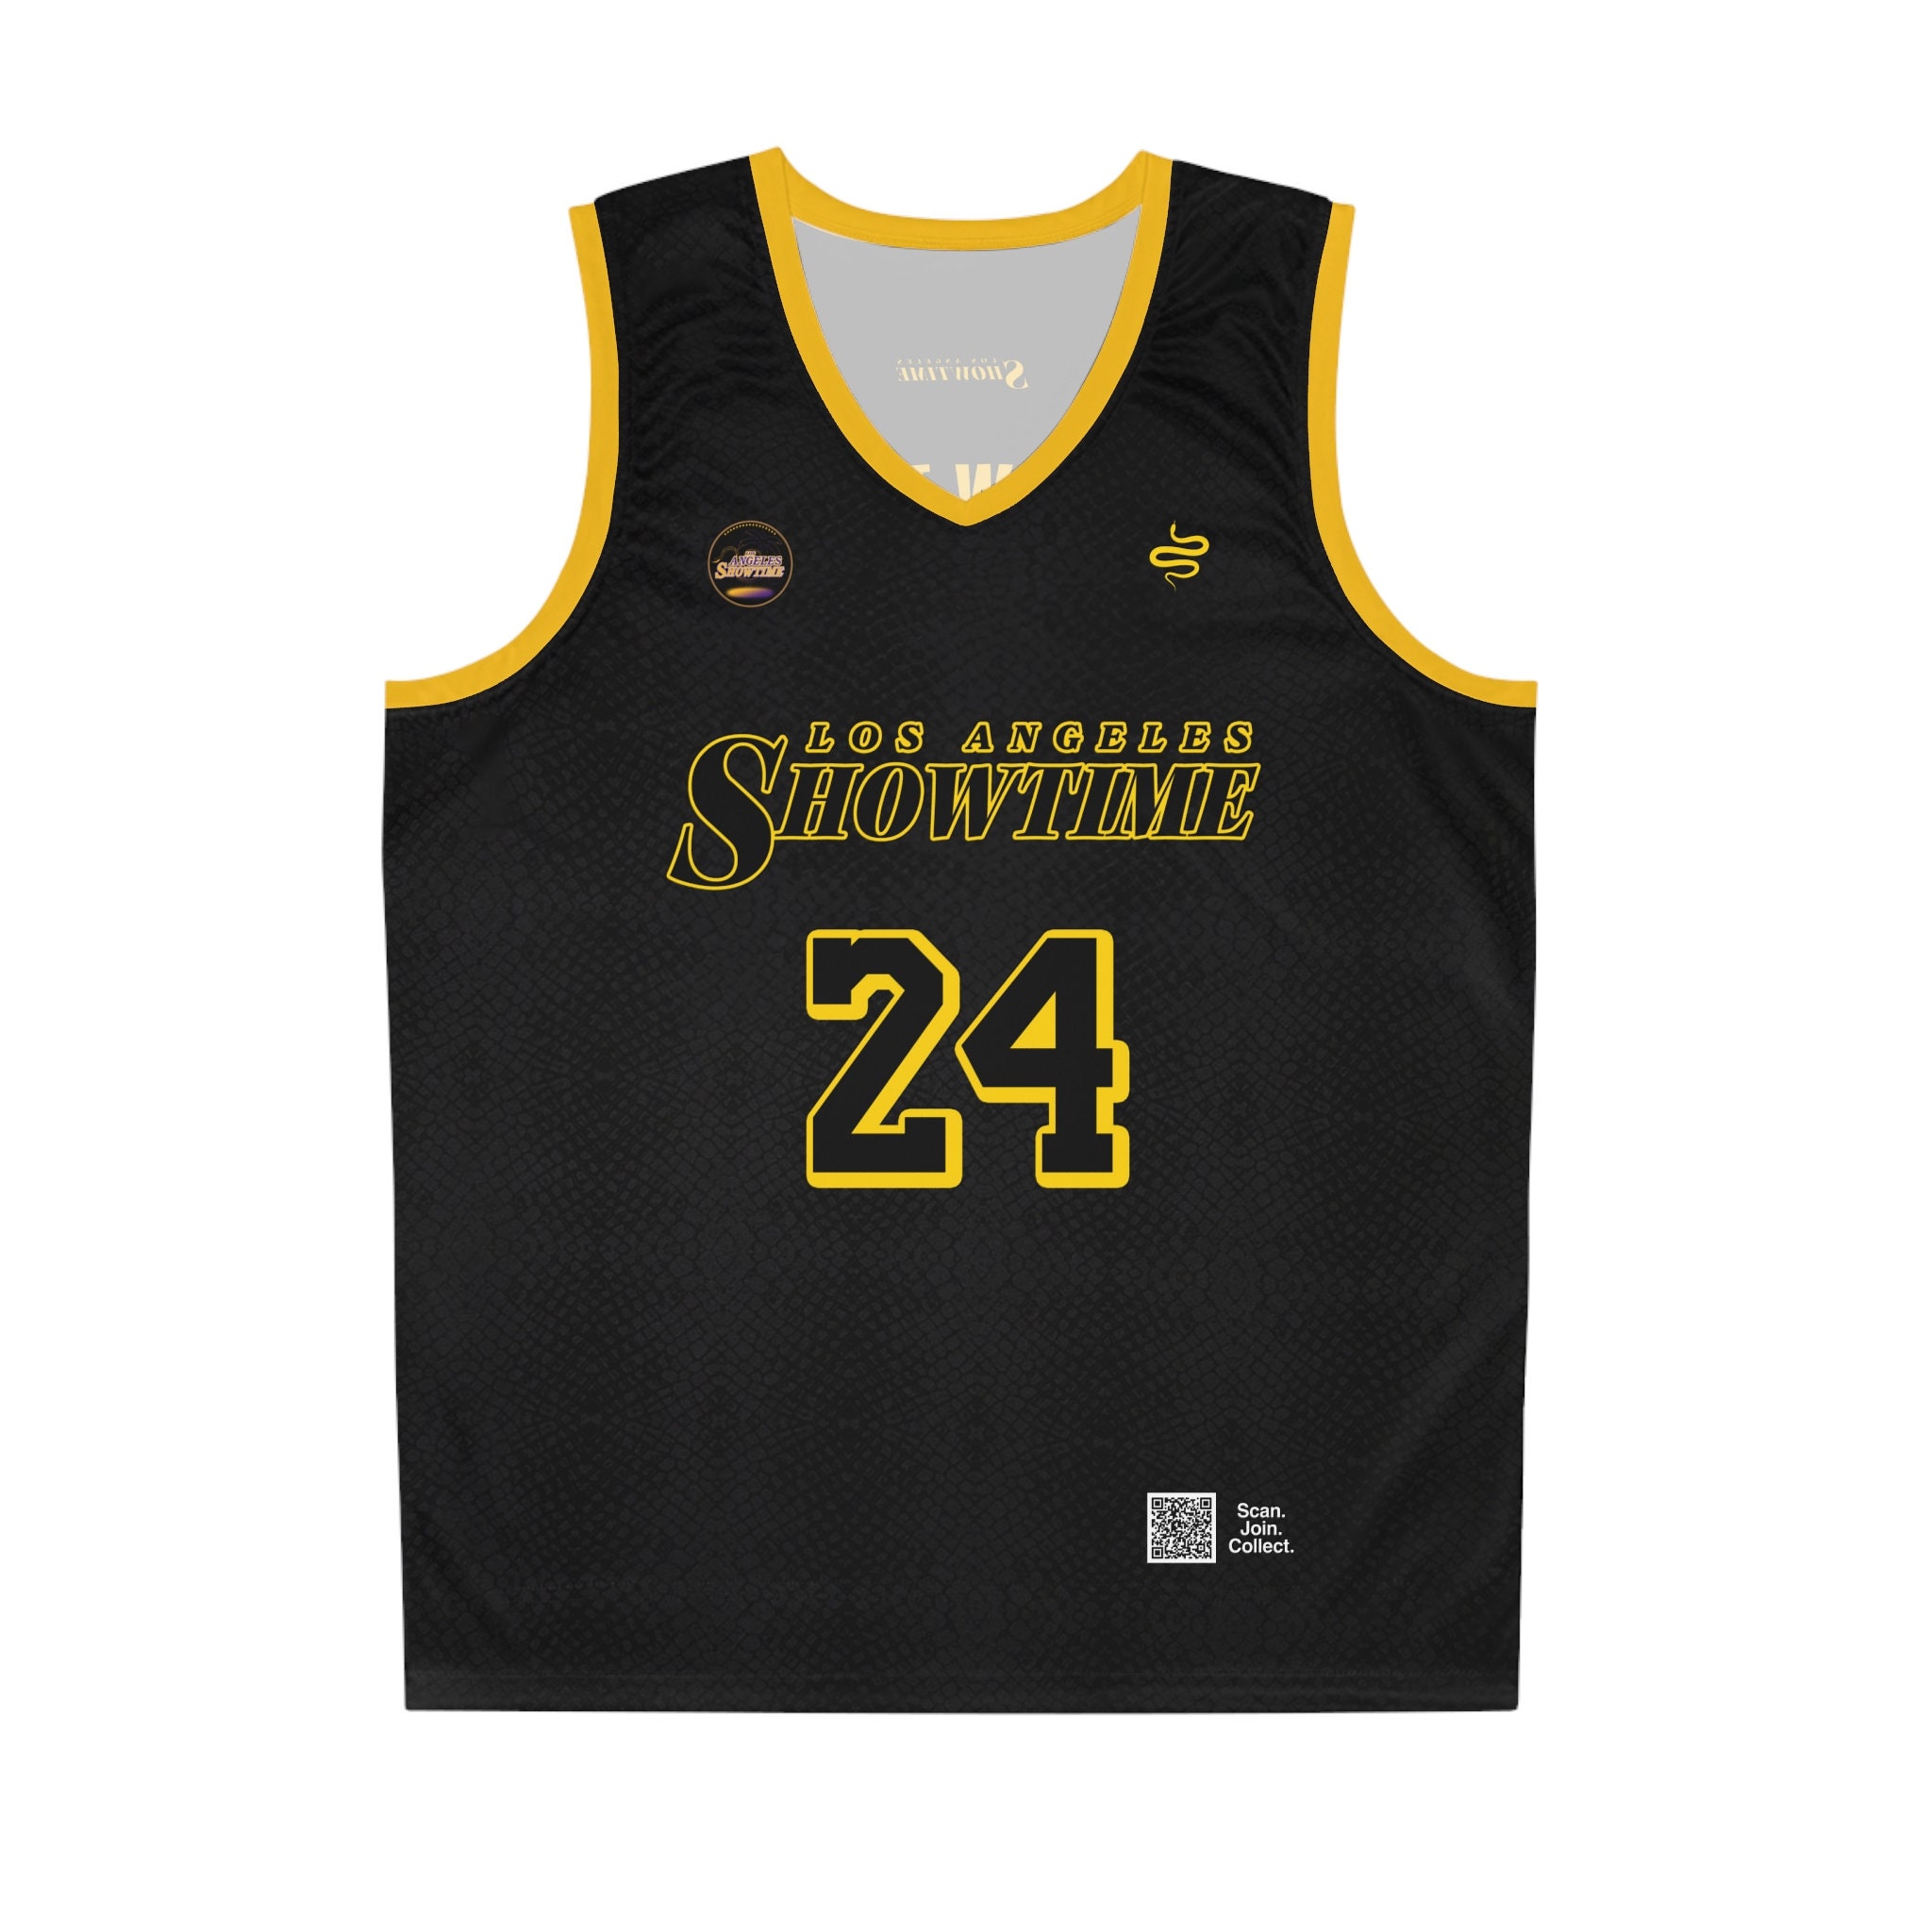 Pin by Otoniel Alvarez on Camisetas de baloncesto  Basketball t shirt  designs, Basketball uniforms design, Sports jersey design